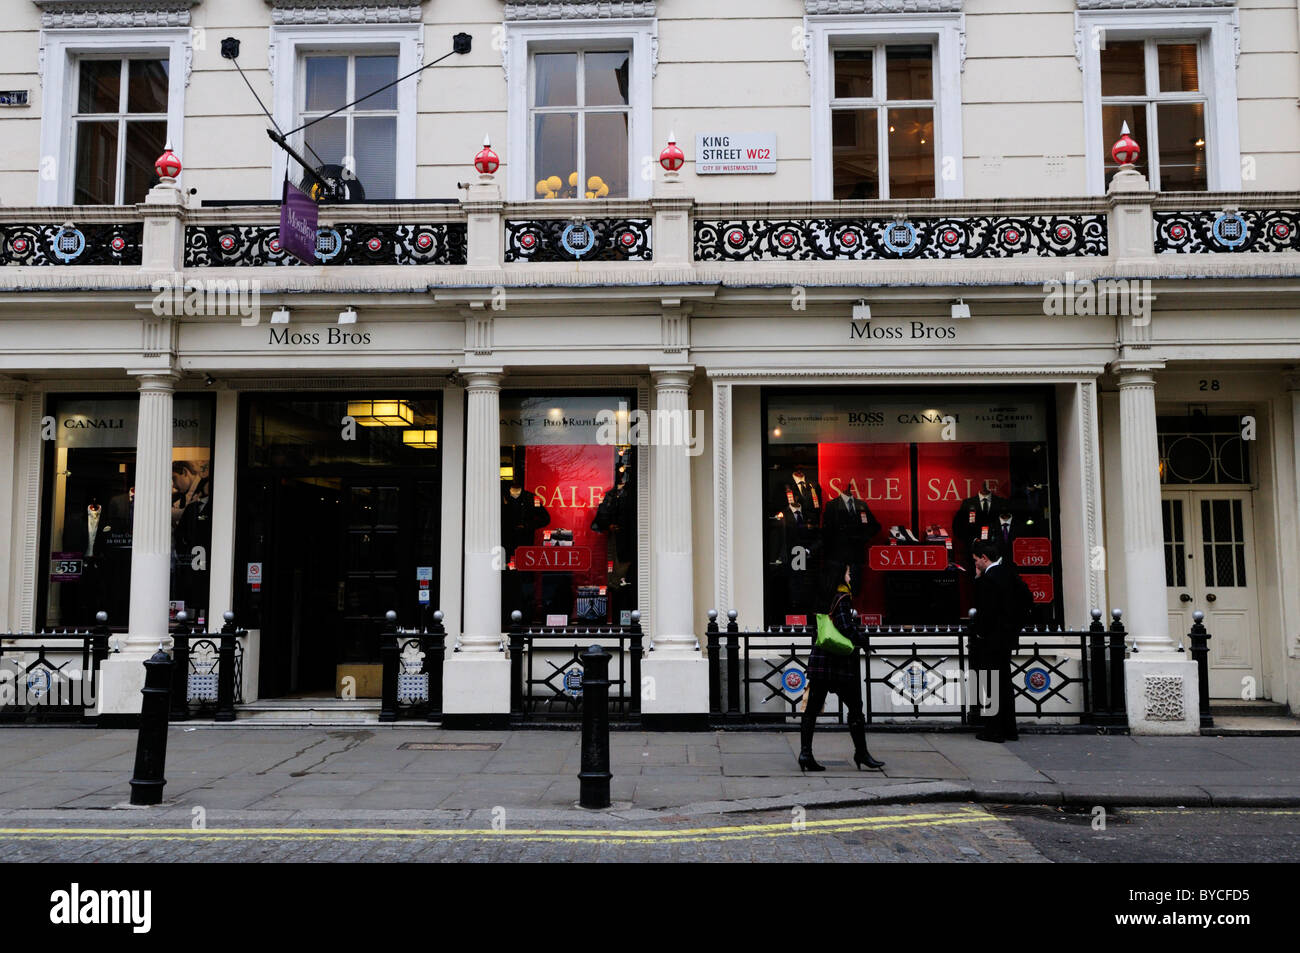 Moss Bros Menswear Tailors shop, King Street, Covent Garden, London, England, UK Stock Photo